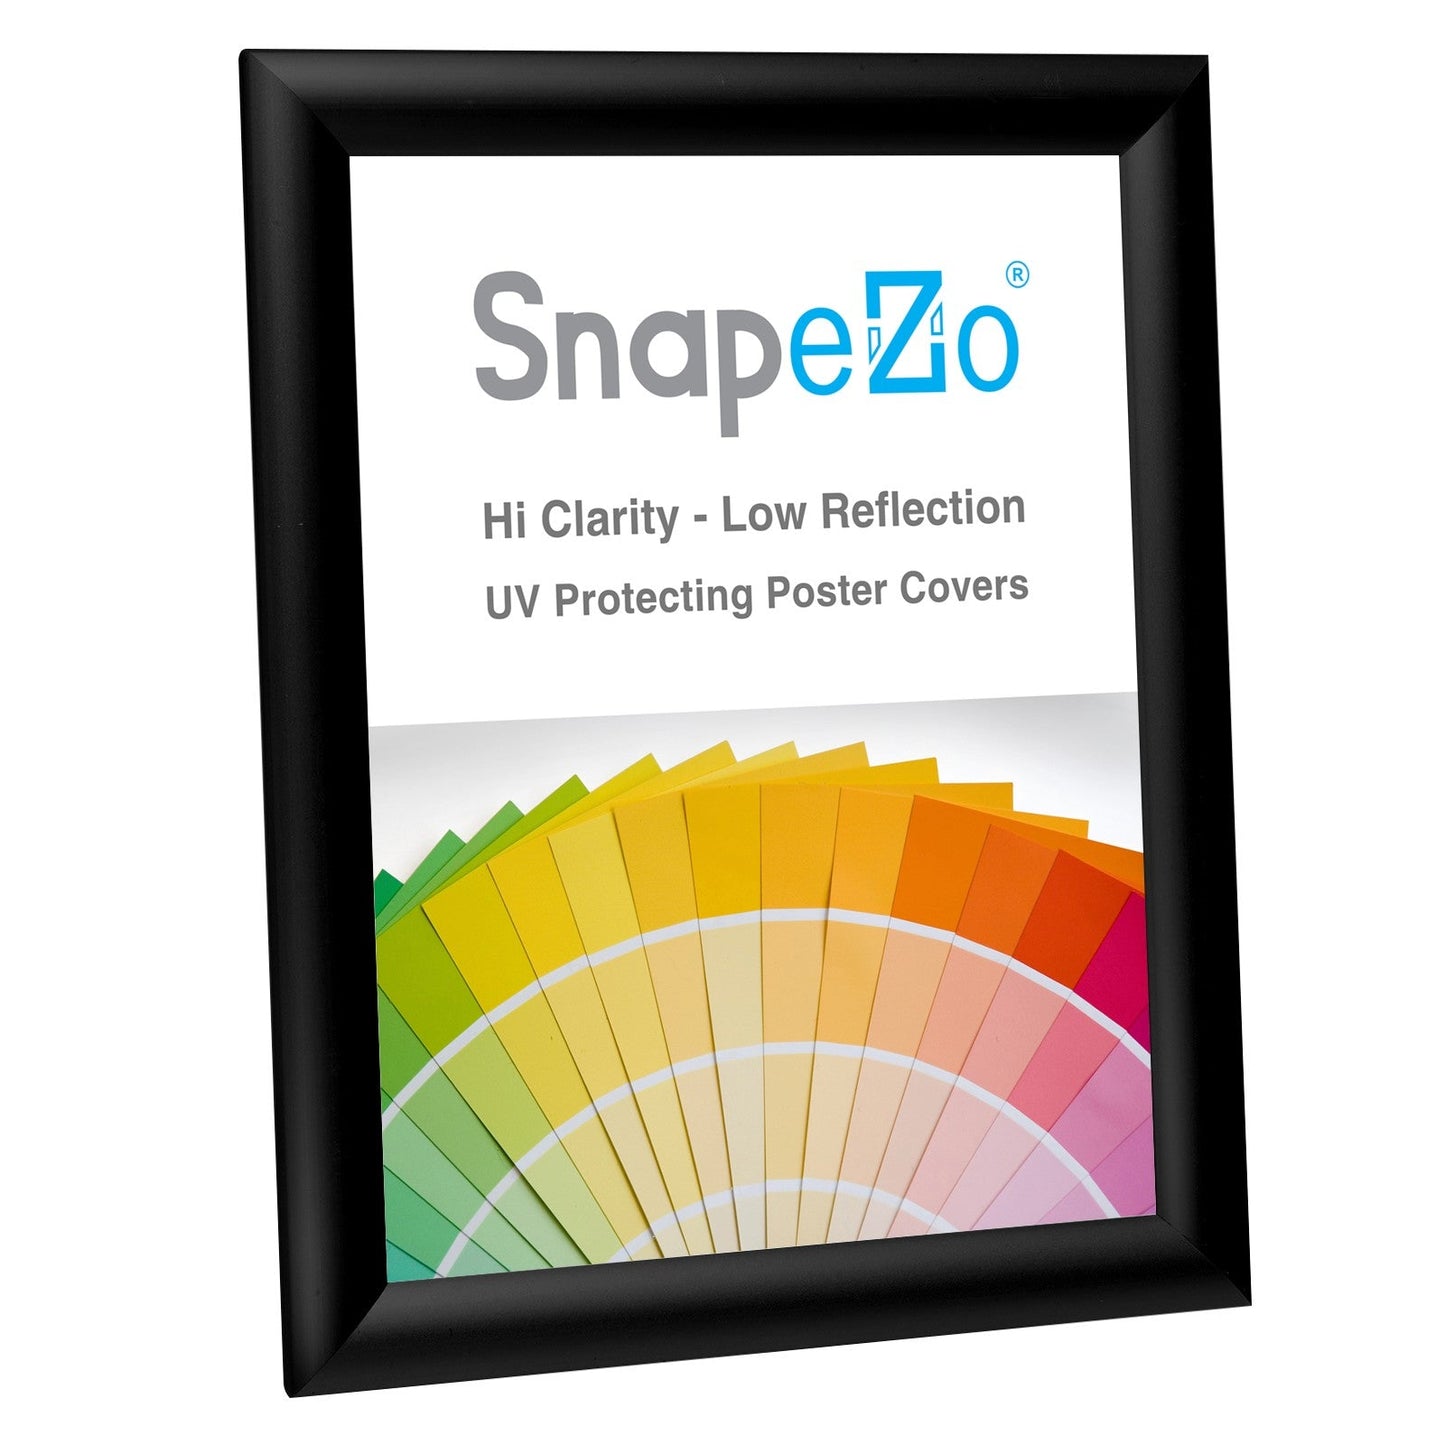 8.5x11 Black SnapeZo® Snap Frame - 1" Profile